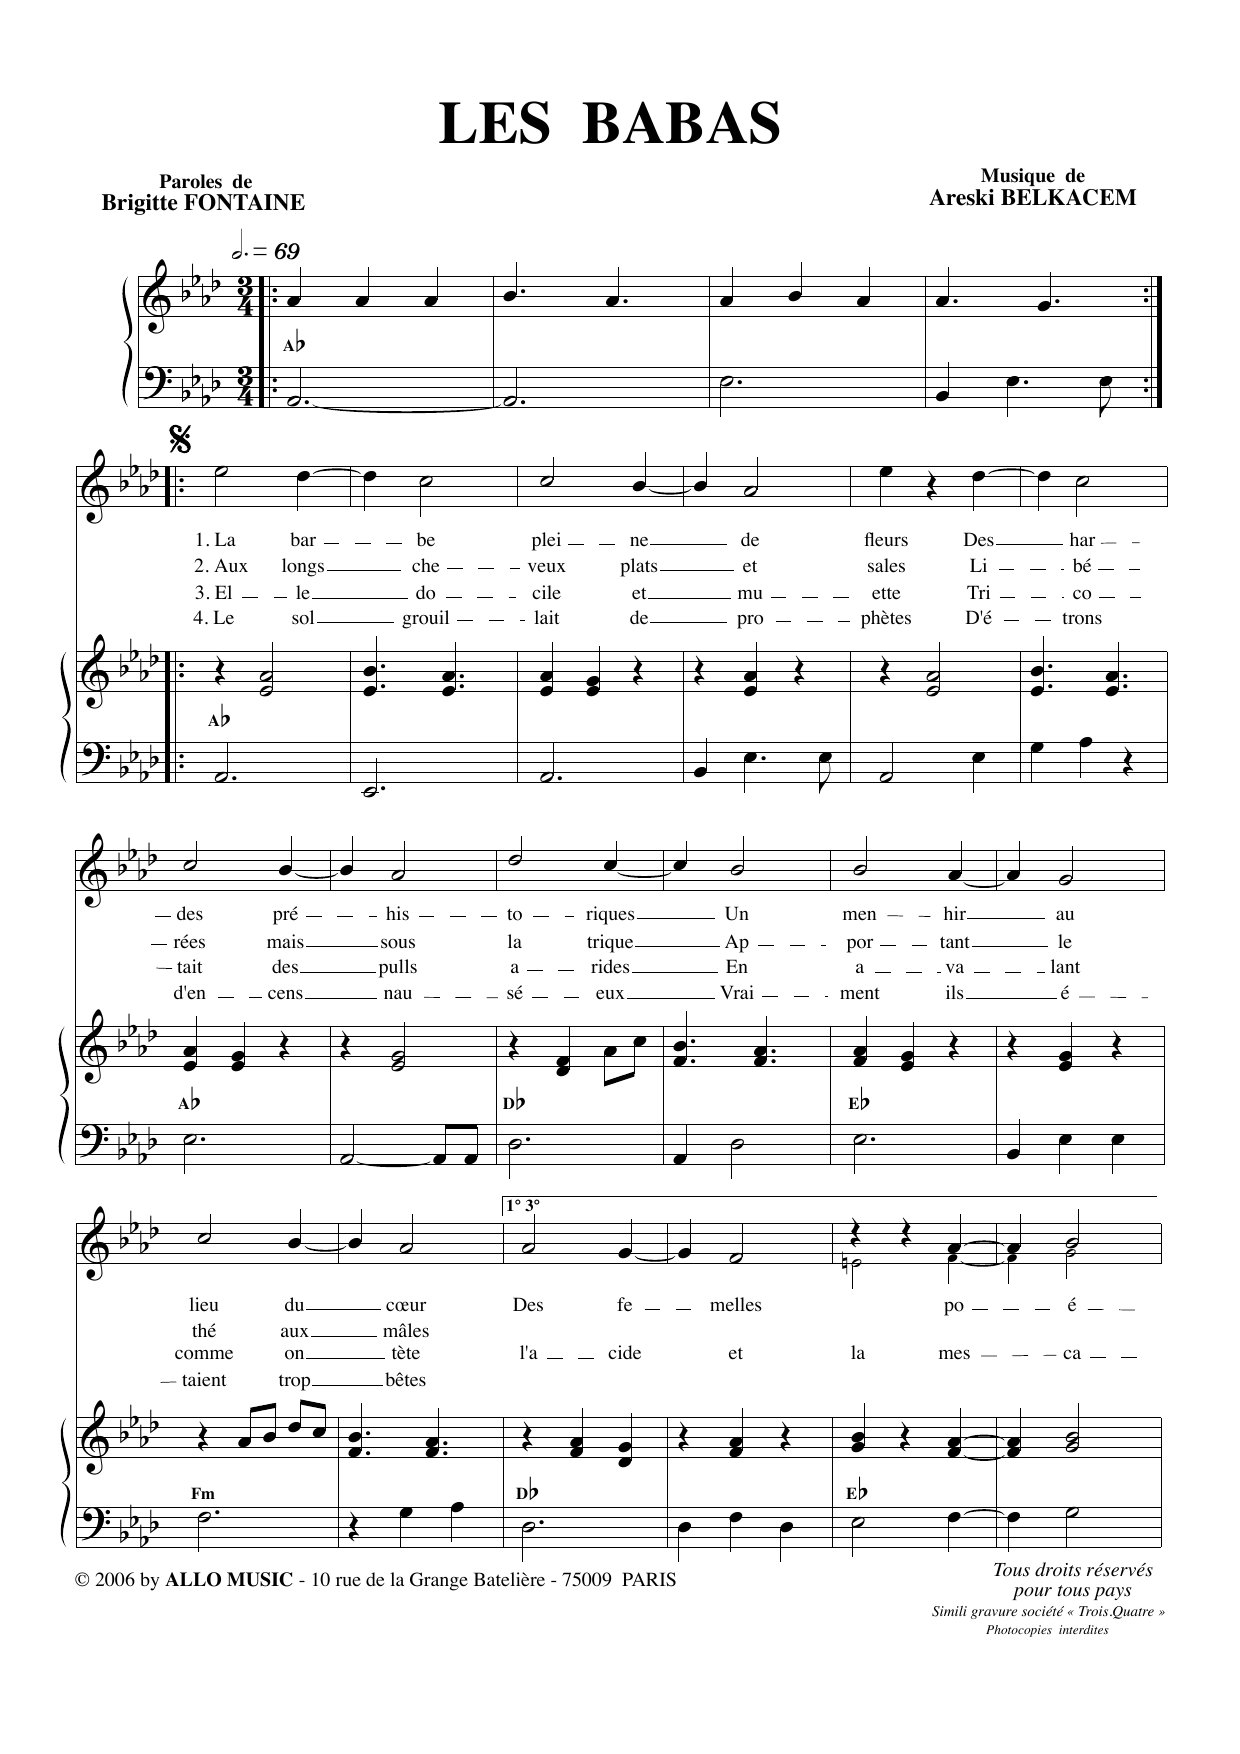 Brigitte Fontaine & Areski Belkacem Les Babas Sheet Music Notes & Chords for Piano & Vocal - Download or Print PDF